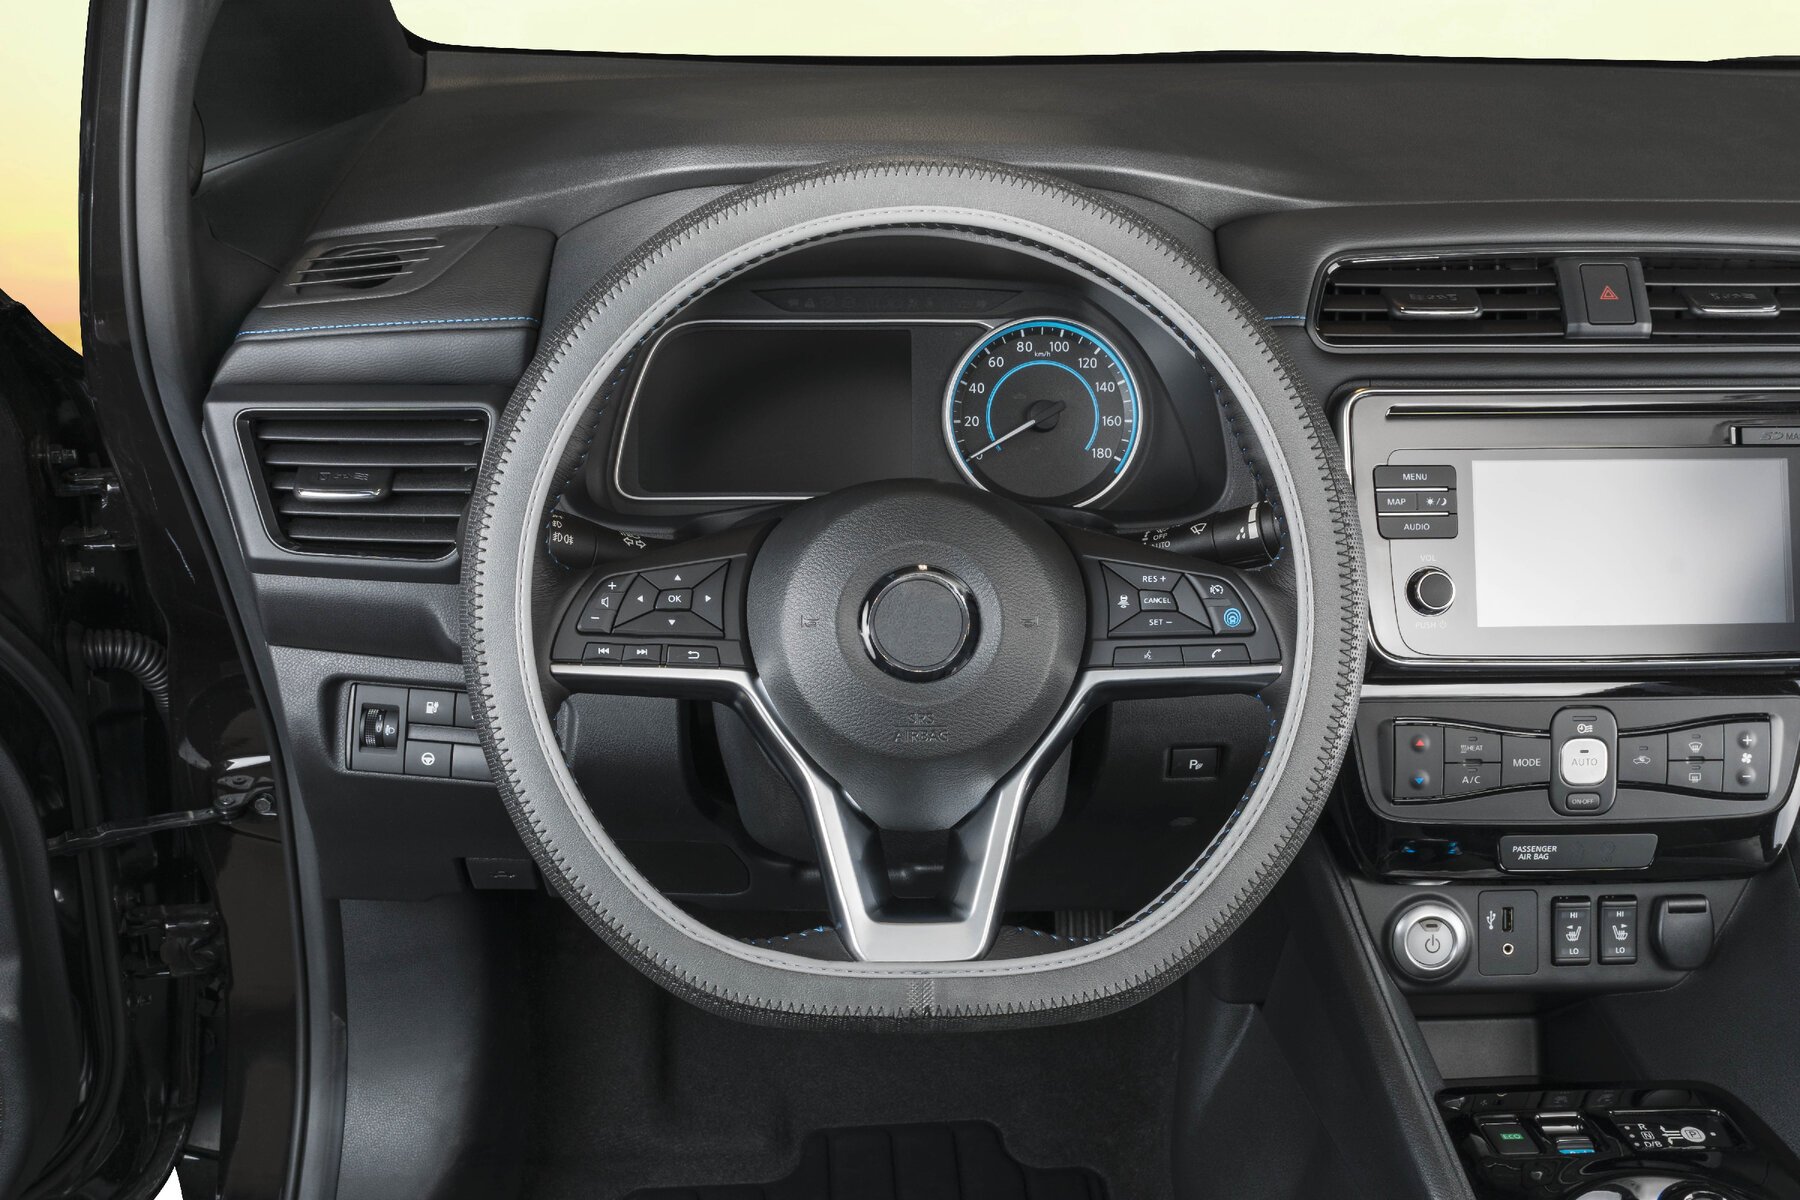 Steering wheel cover Soft Grip Styler - 38 cm black-grey